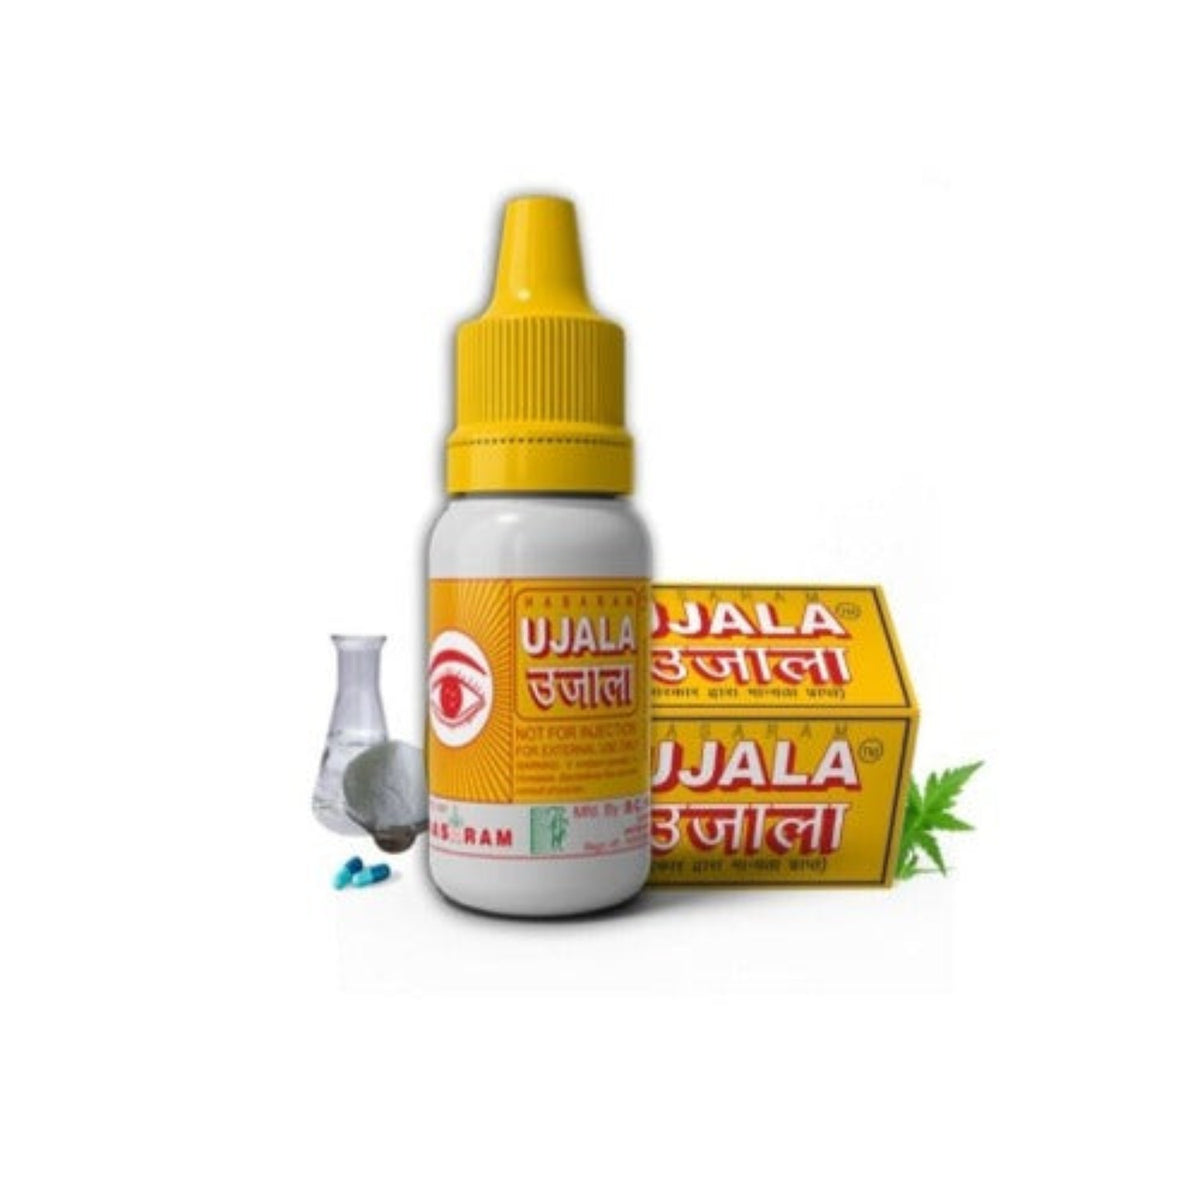 B.C.Hasaram & Sons Ujala Drops Ayurvedic Ujala Eye Drops,Organic 100% Natural & Pure Herbs,Ayurvedic Eye Drops For Refreshing,Fights Dry Eyes,Helpful For Eye Health